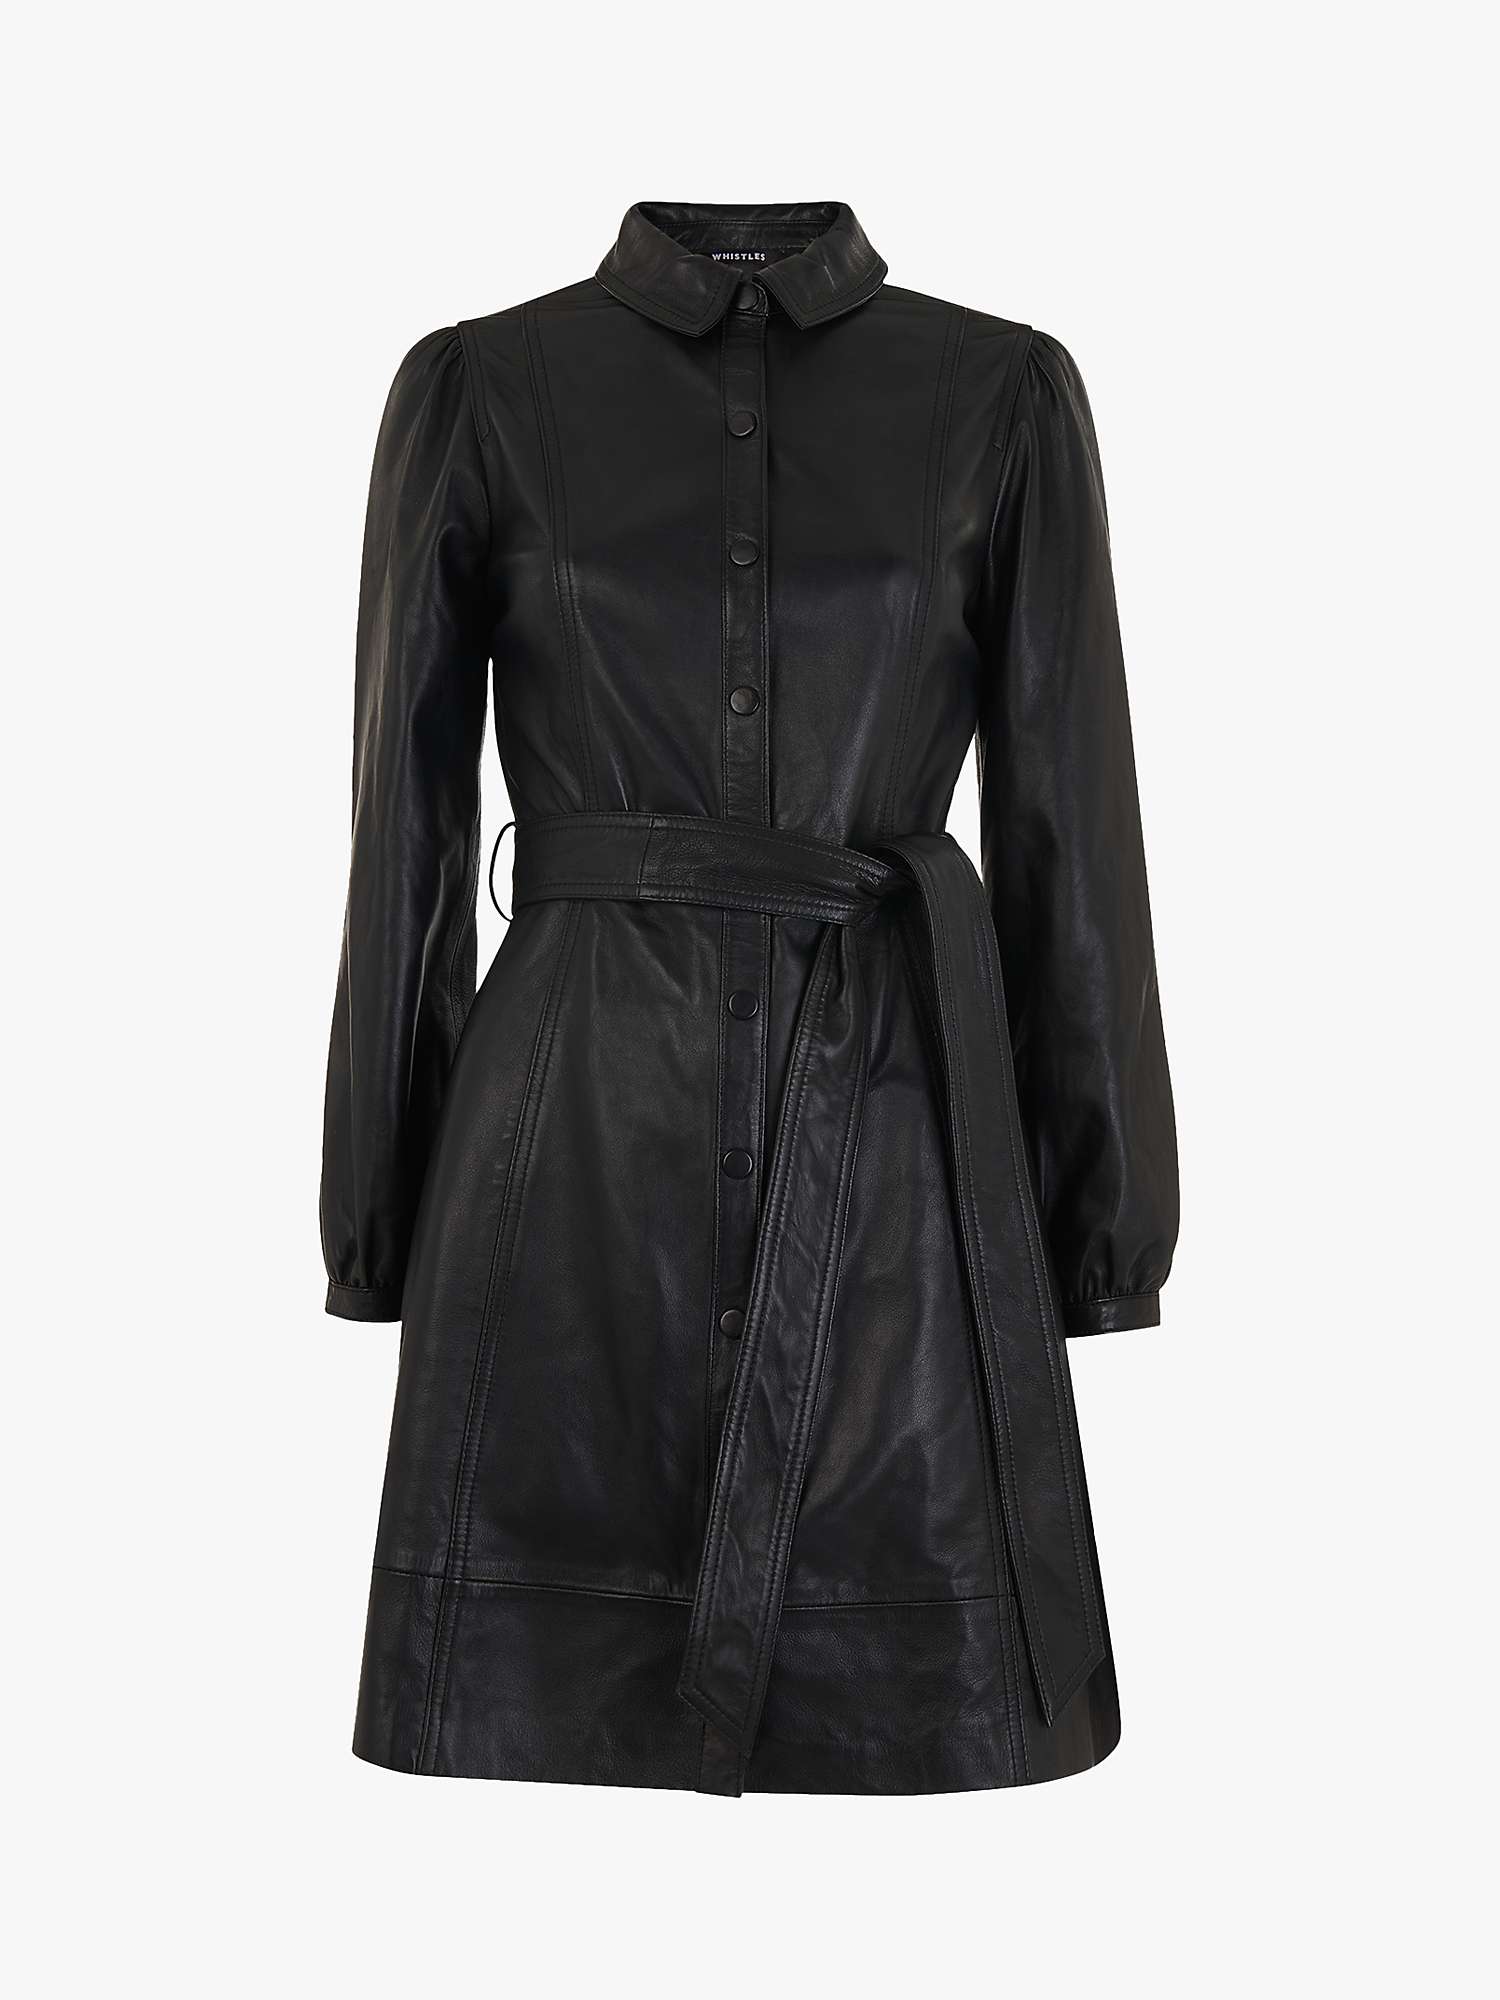 Whistles Phoebe Leather Shirt Mini Dress, Black at John Lewis & Partners